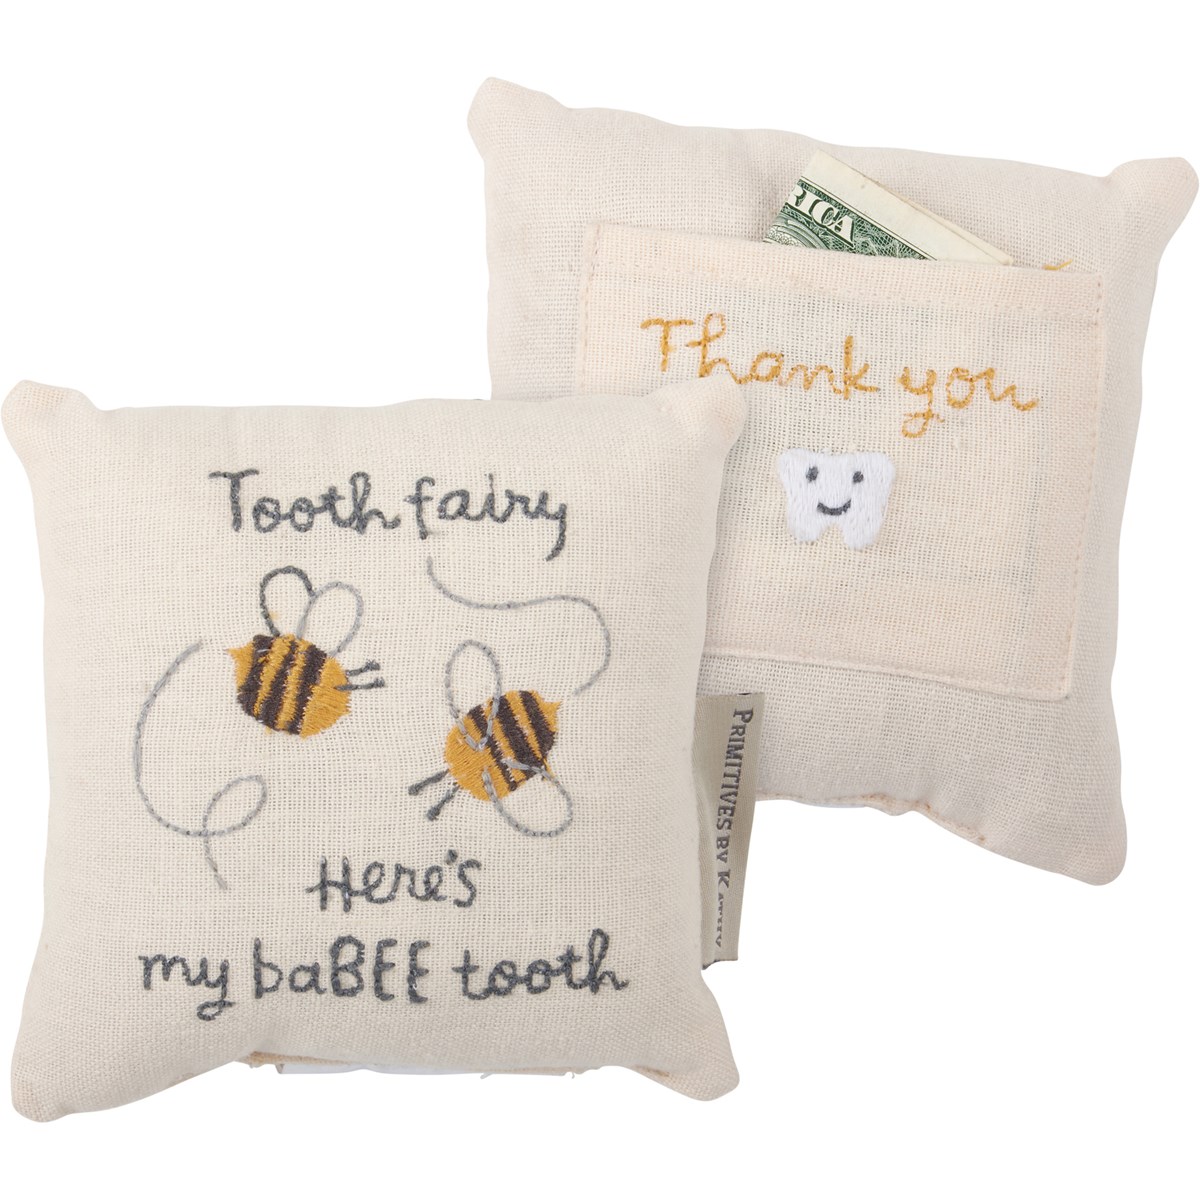 Pillow - Dear Tooth Fairy My Babee Tooth - 5" x 5", Pocket: 3.50" x 2.75" - Cotton, Linen